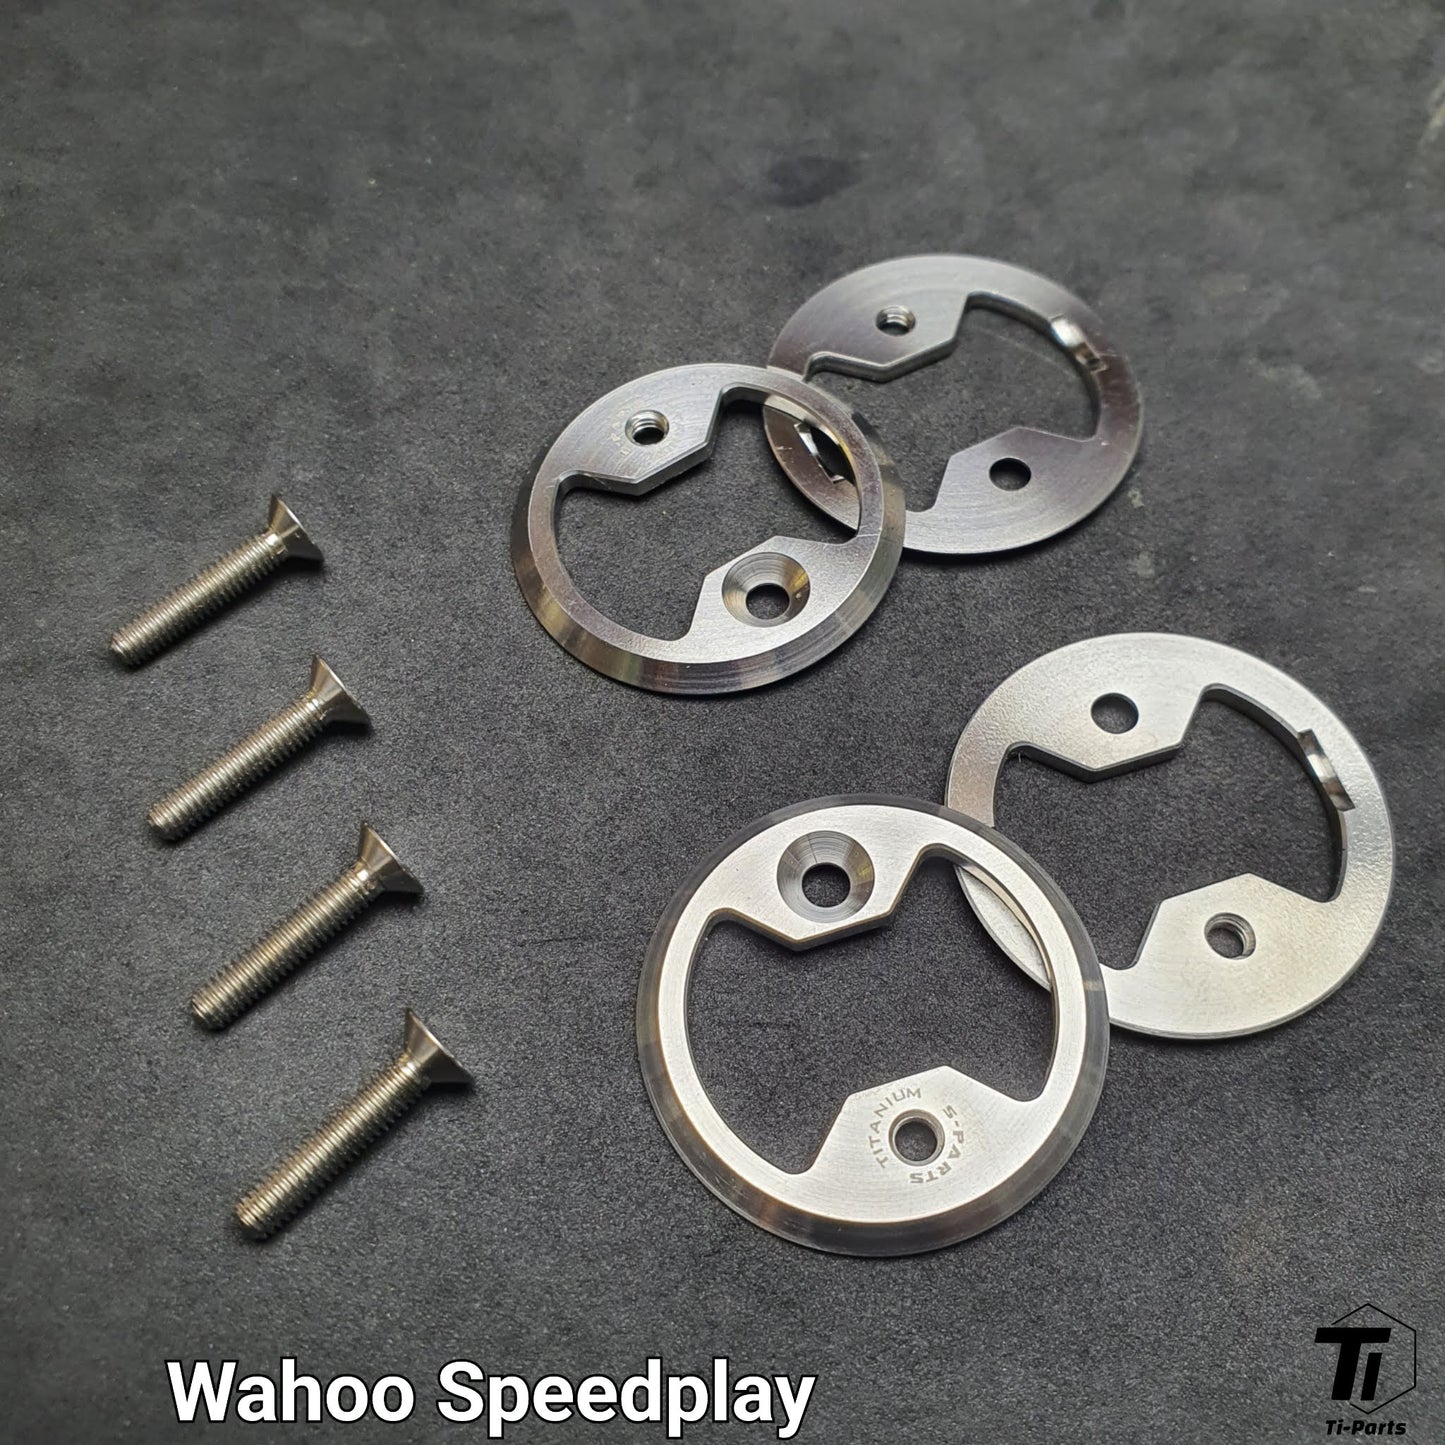 Titanium Wahoo SpeedPlay Upgrade Kit | Prwlink Zero Power Meter Pedal | Grade 5 Titanium Singapore